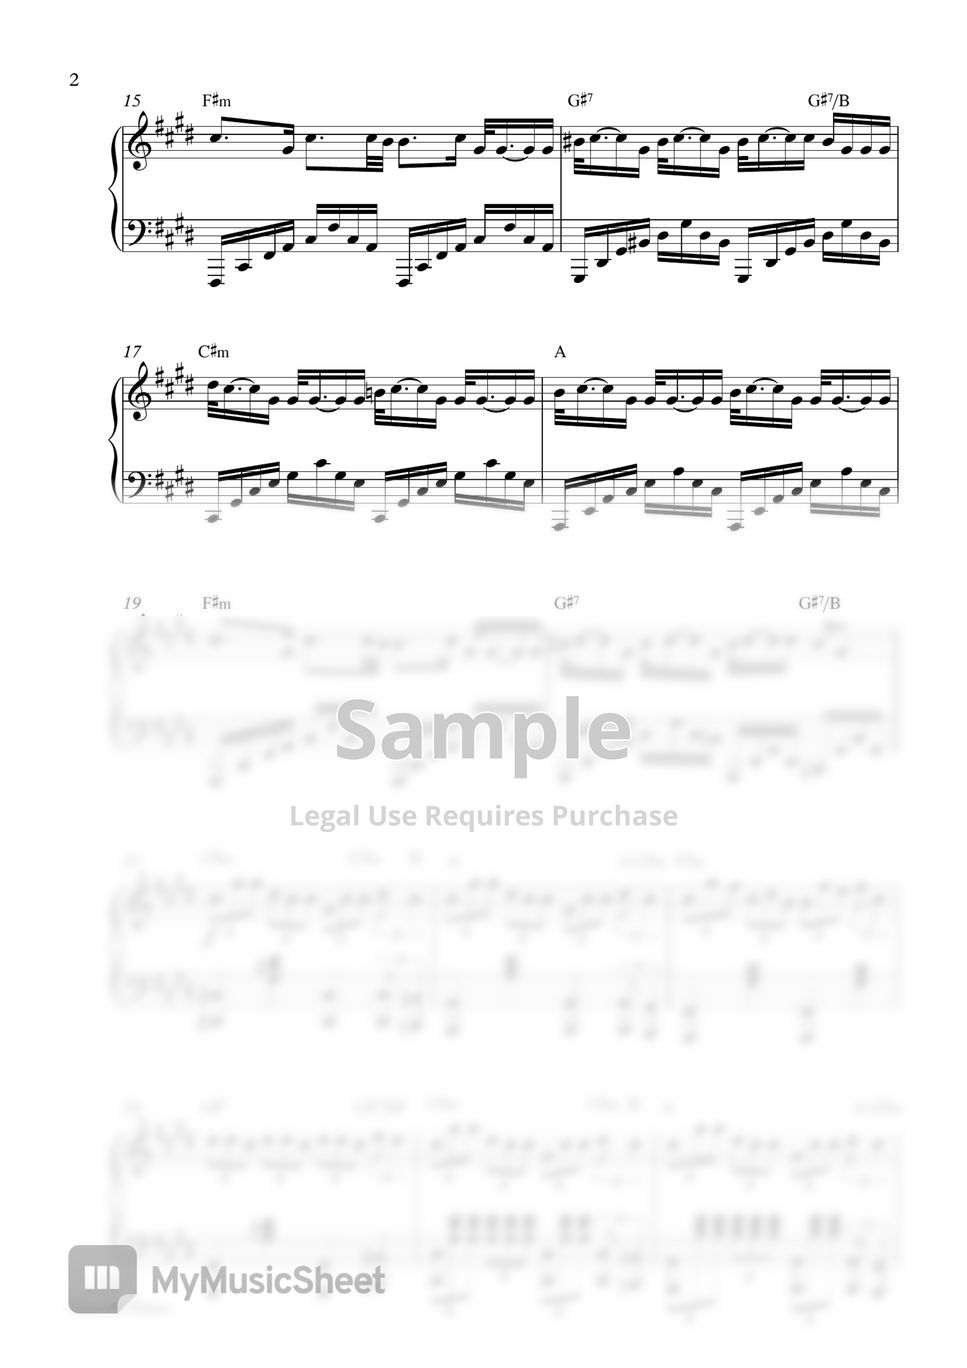 Ariana Grande - 7 rings (Piano Sheet) by Pianella Piano